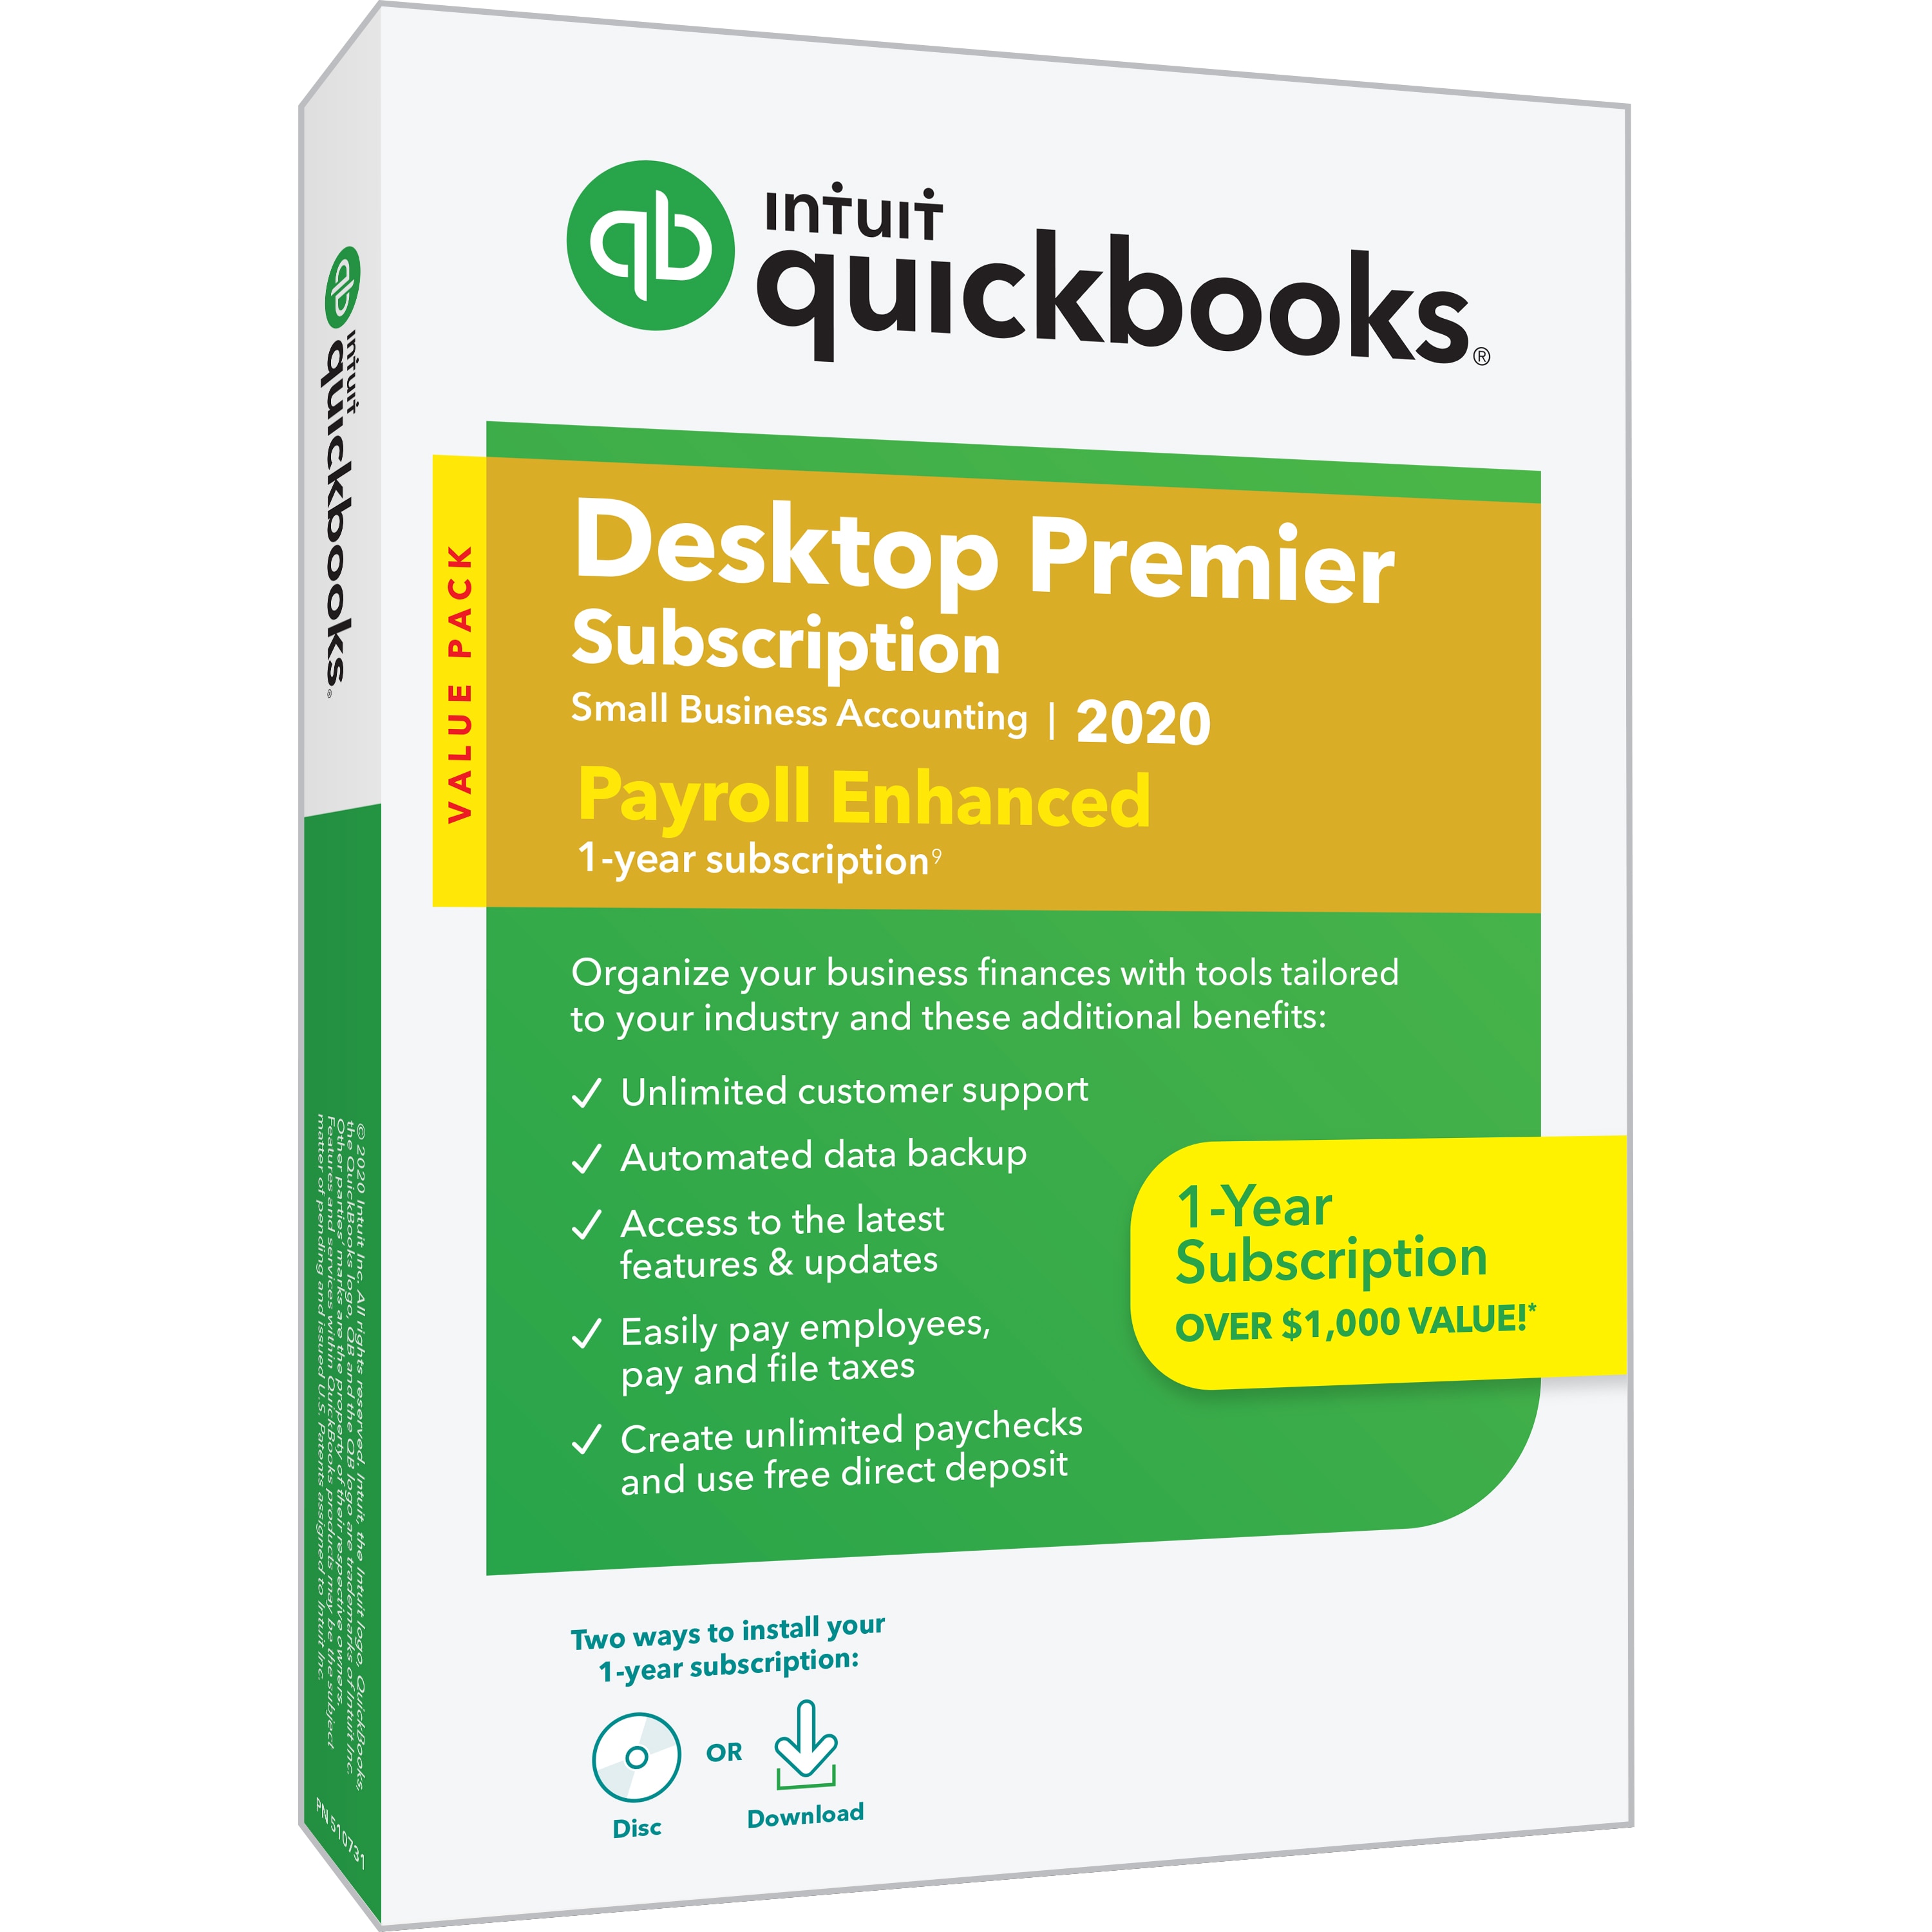 quickbooks desktop pro 2020 mac download